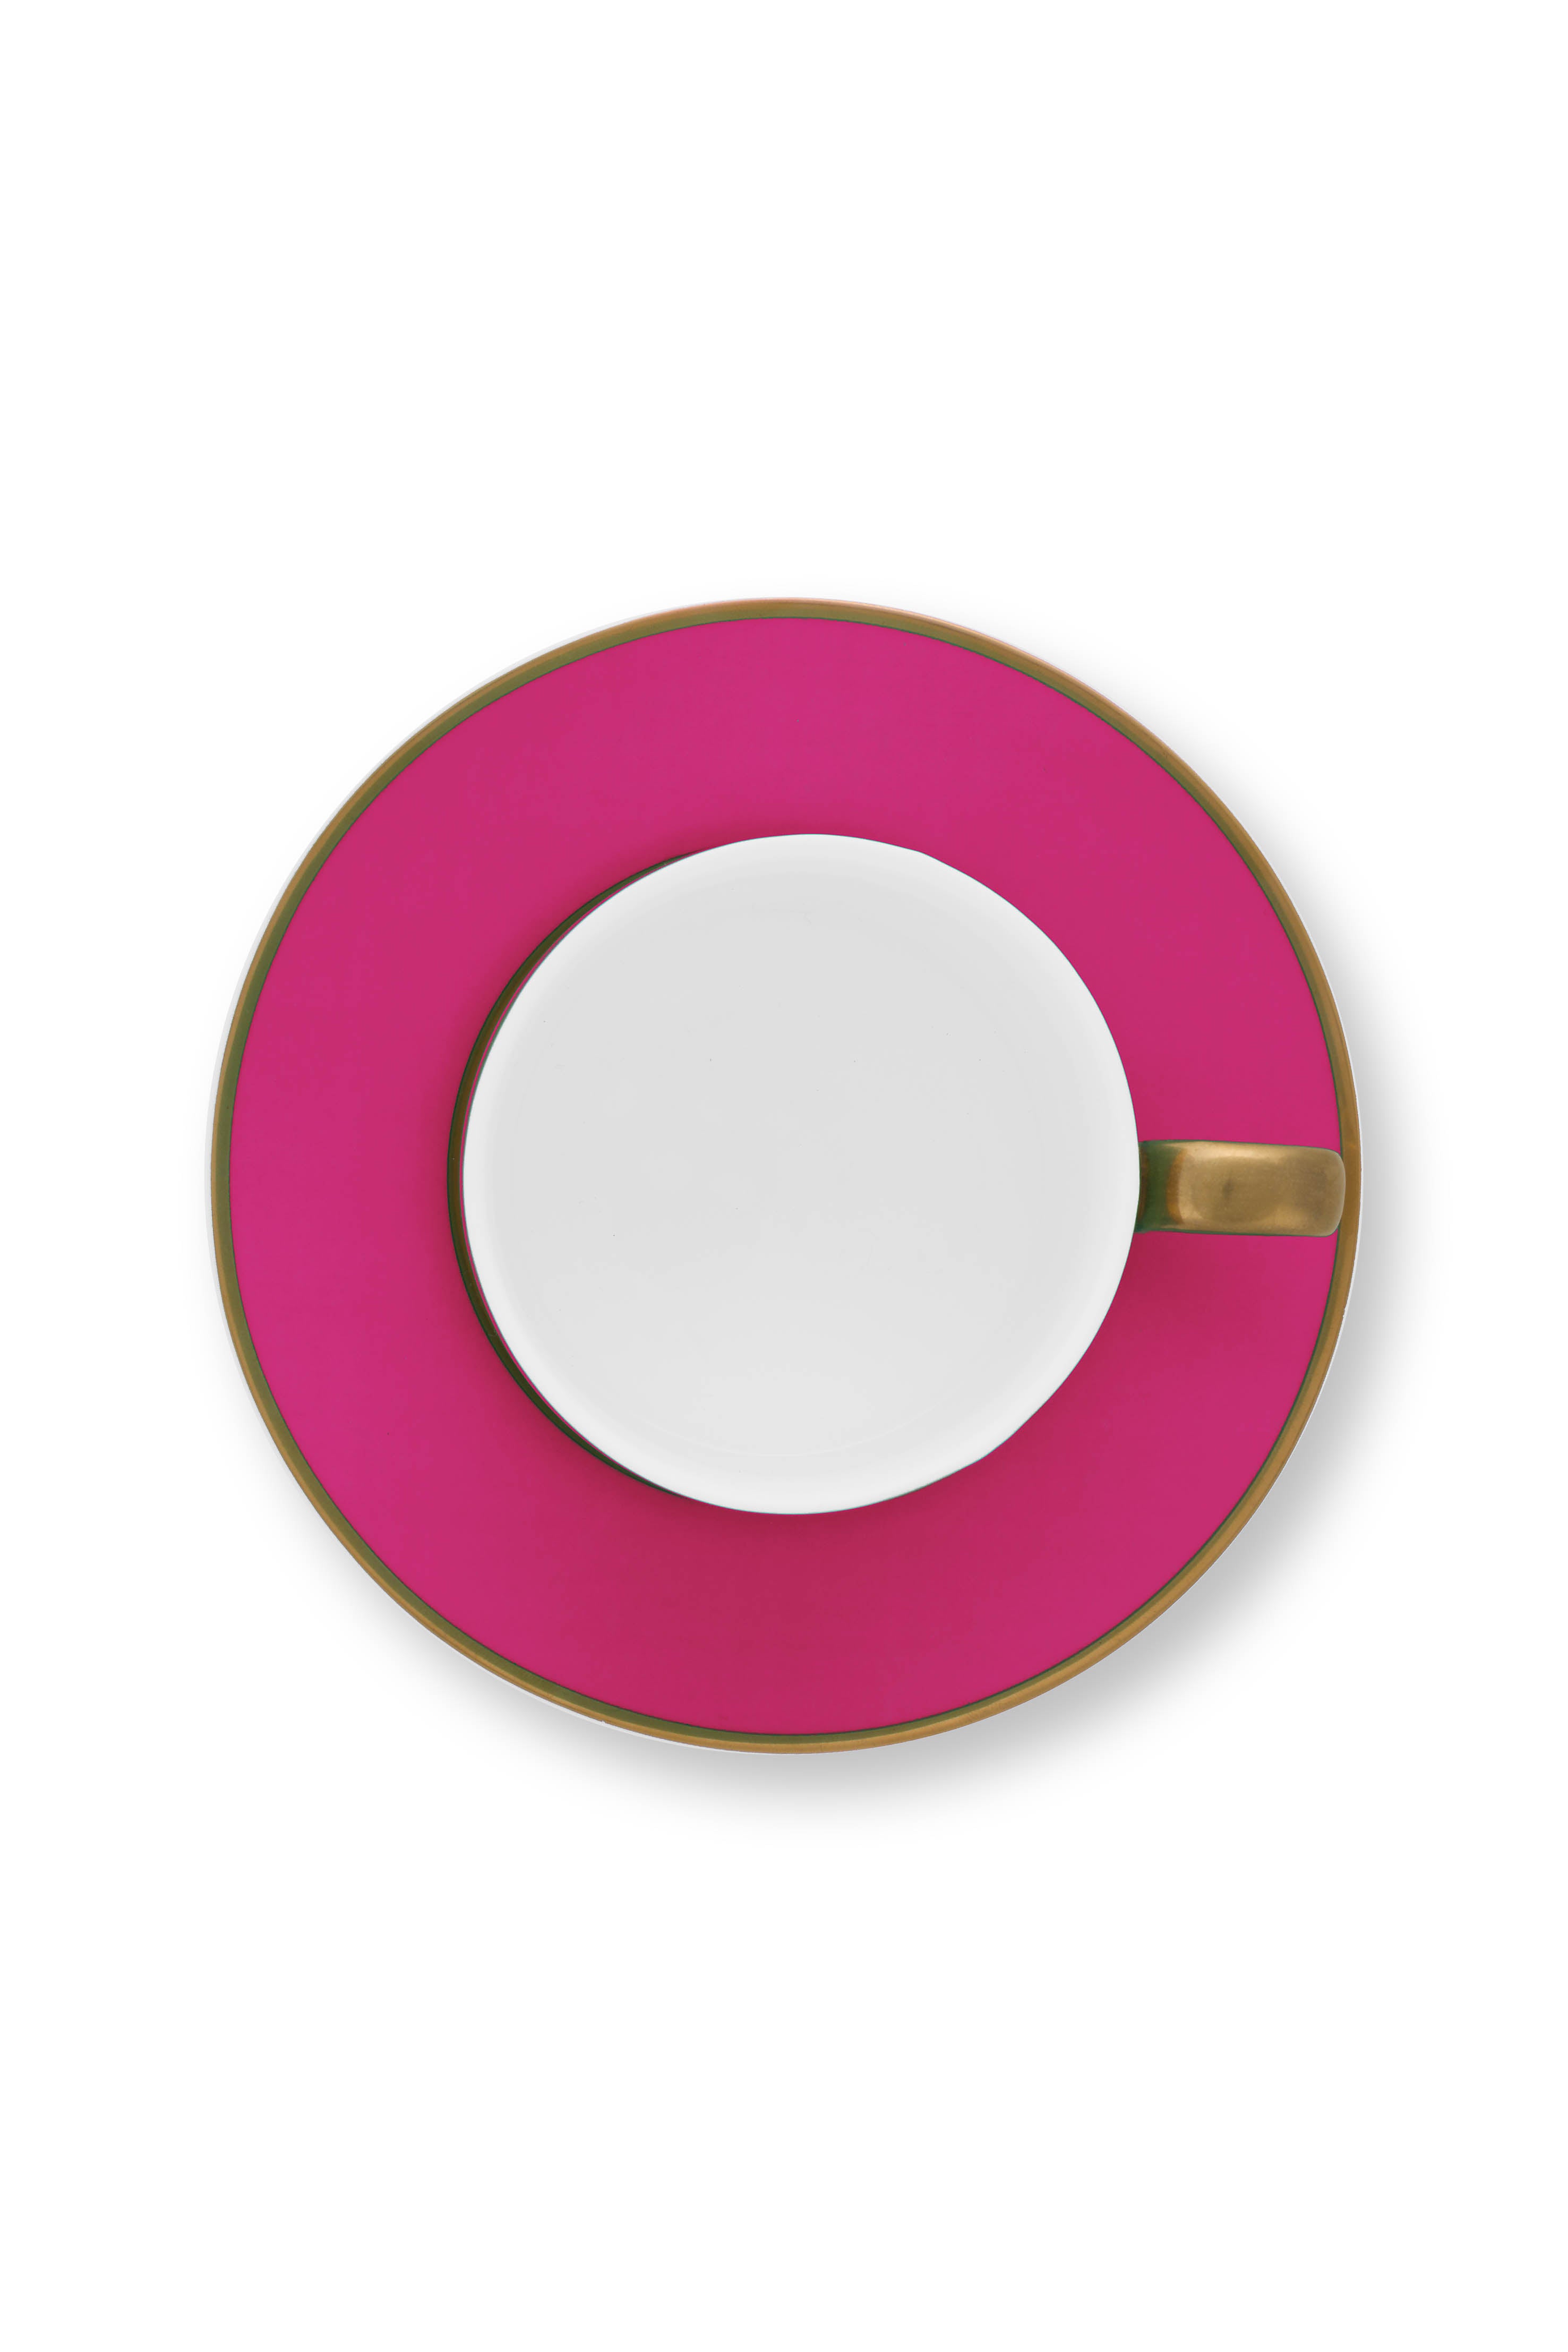 Cup & Saucer Gold-Pink 220ml